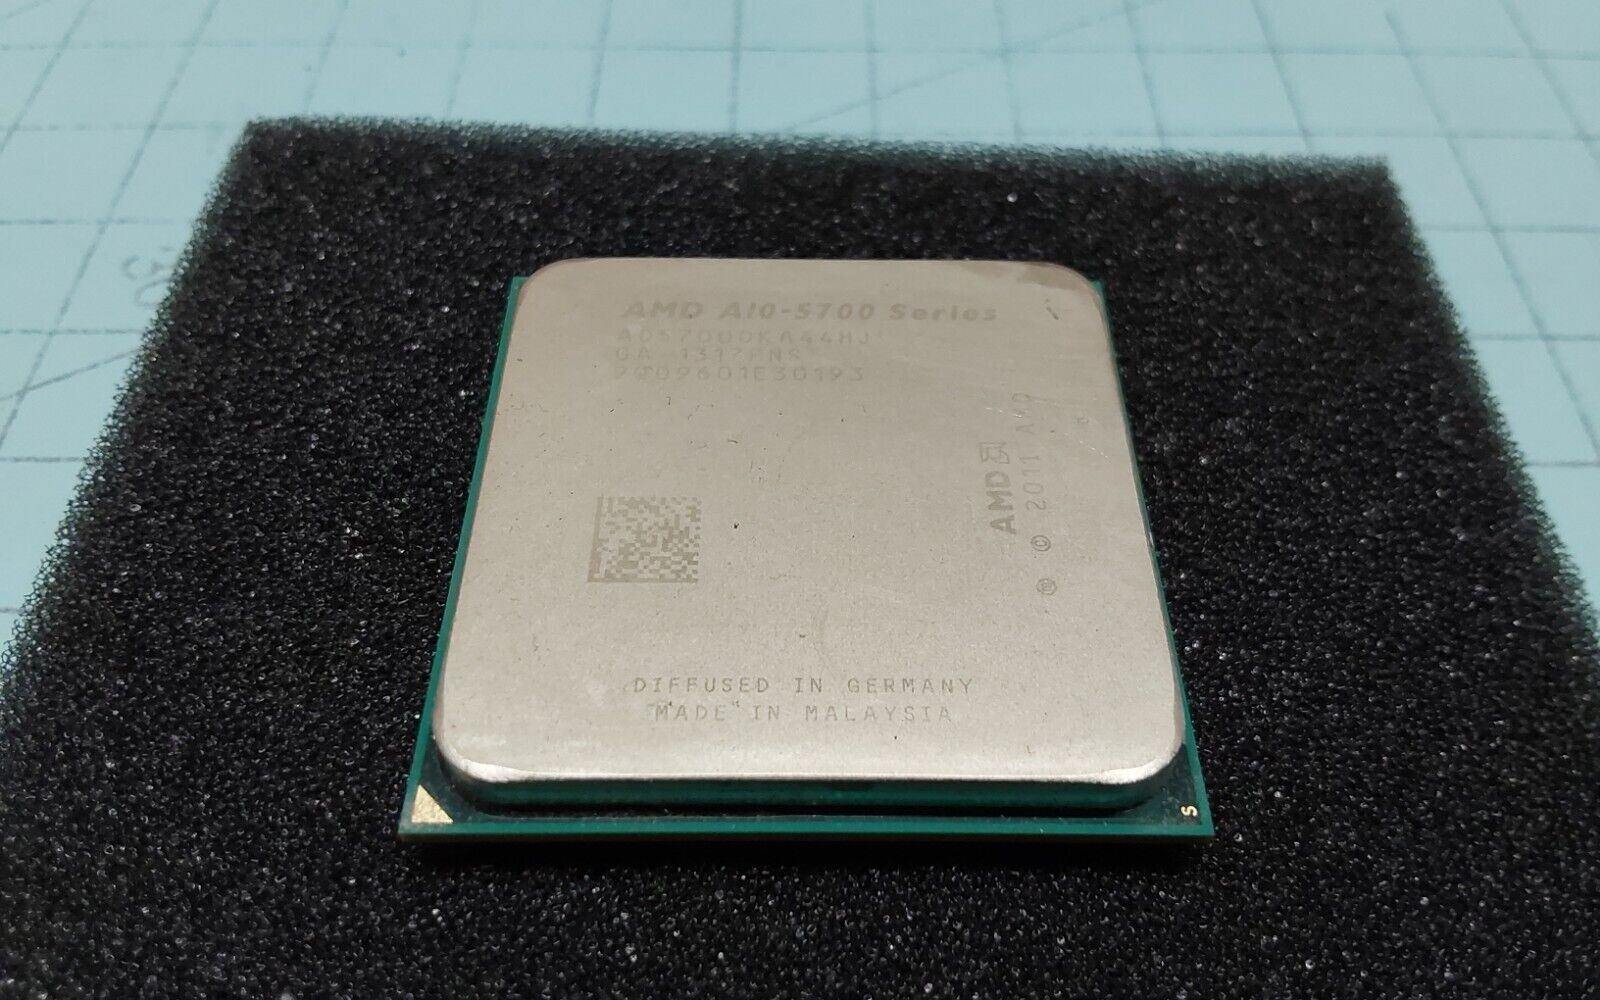 AMD A10-5700 Series AD5700KA44HJ 3.40GHZ 4 Core FM2 CPU